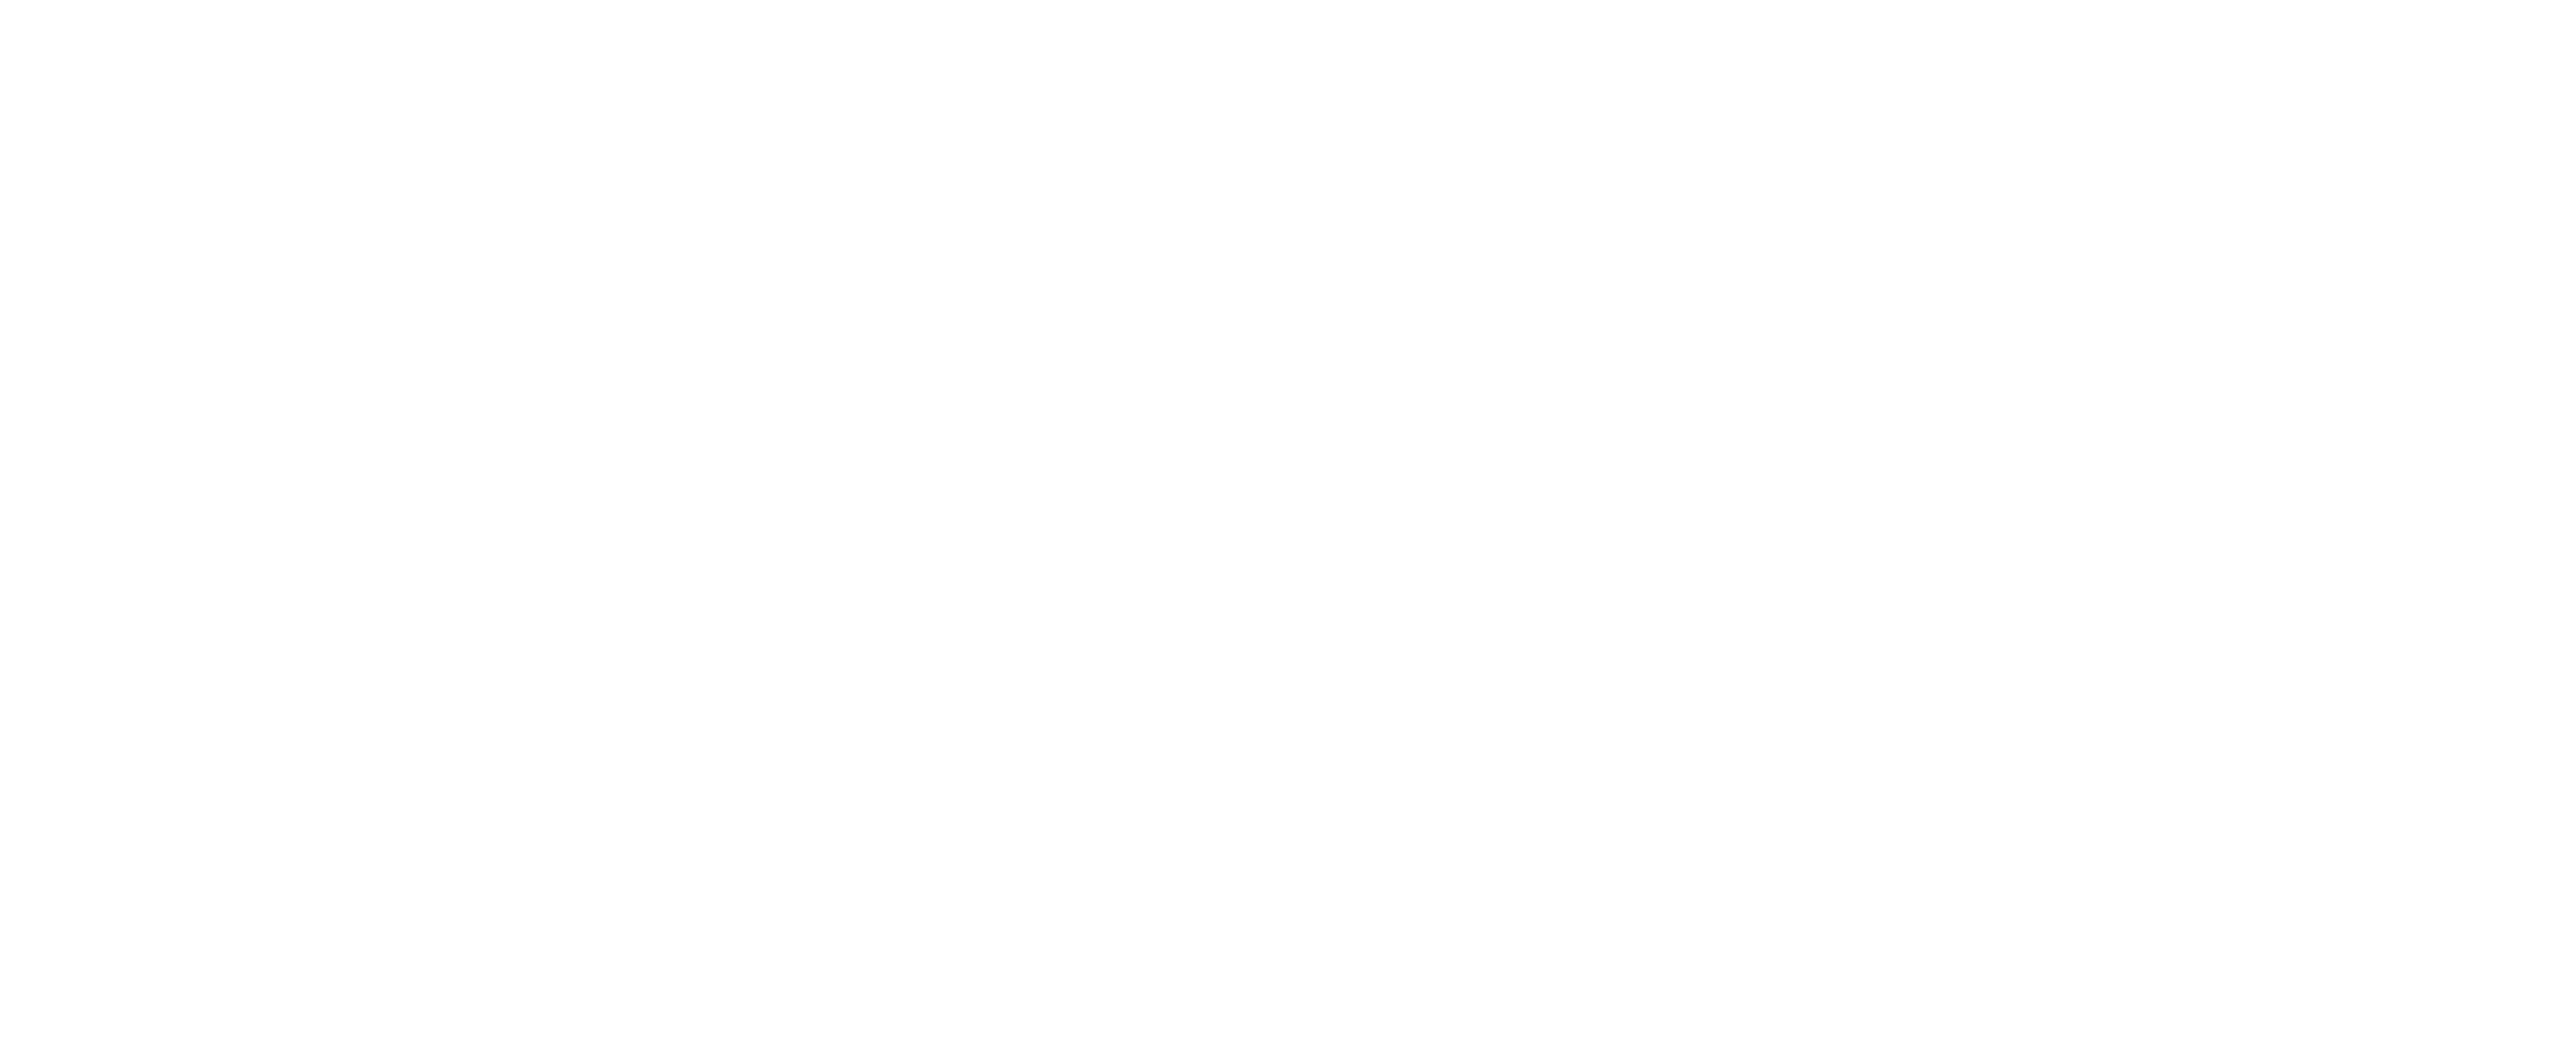 Sonchoy